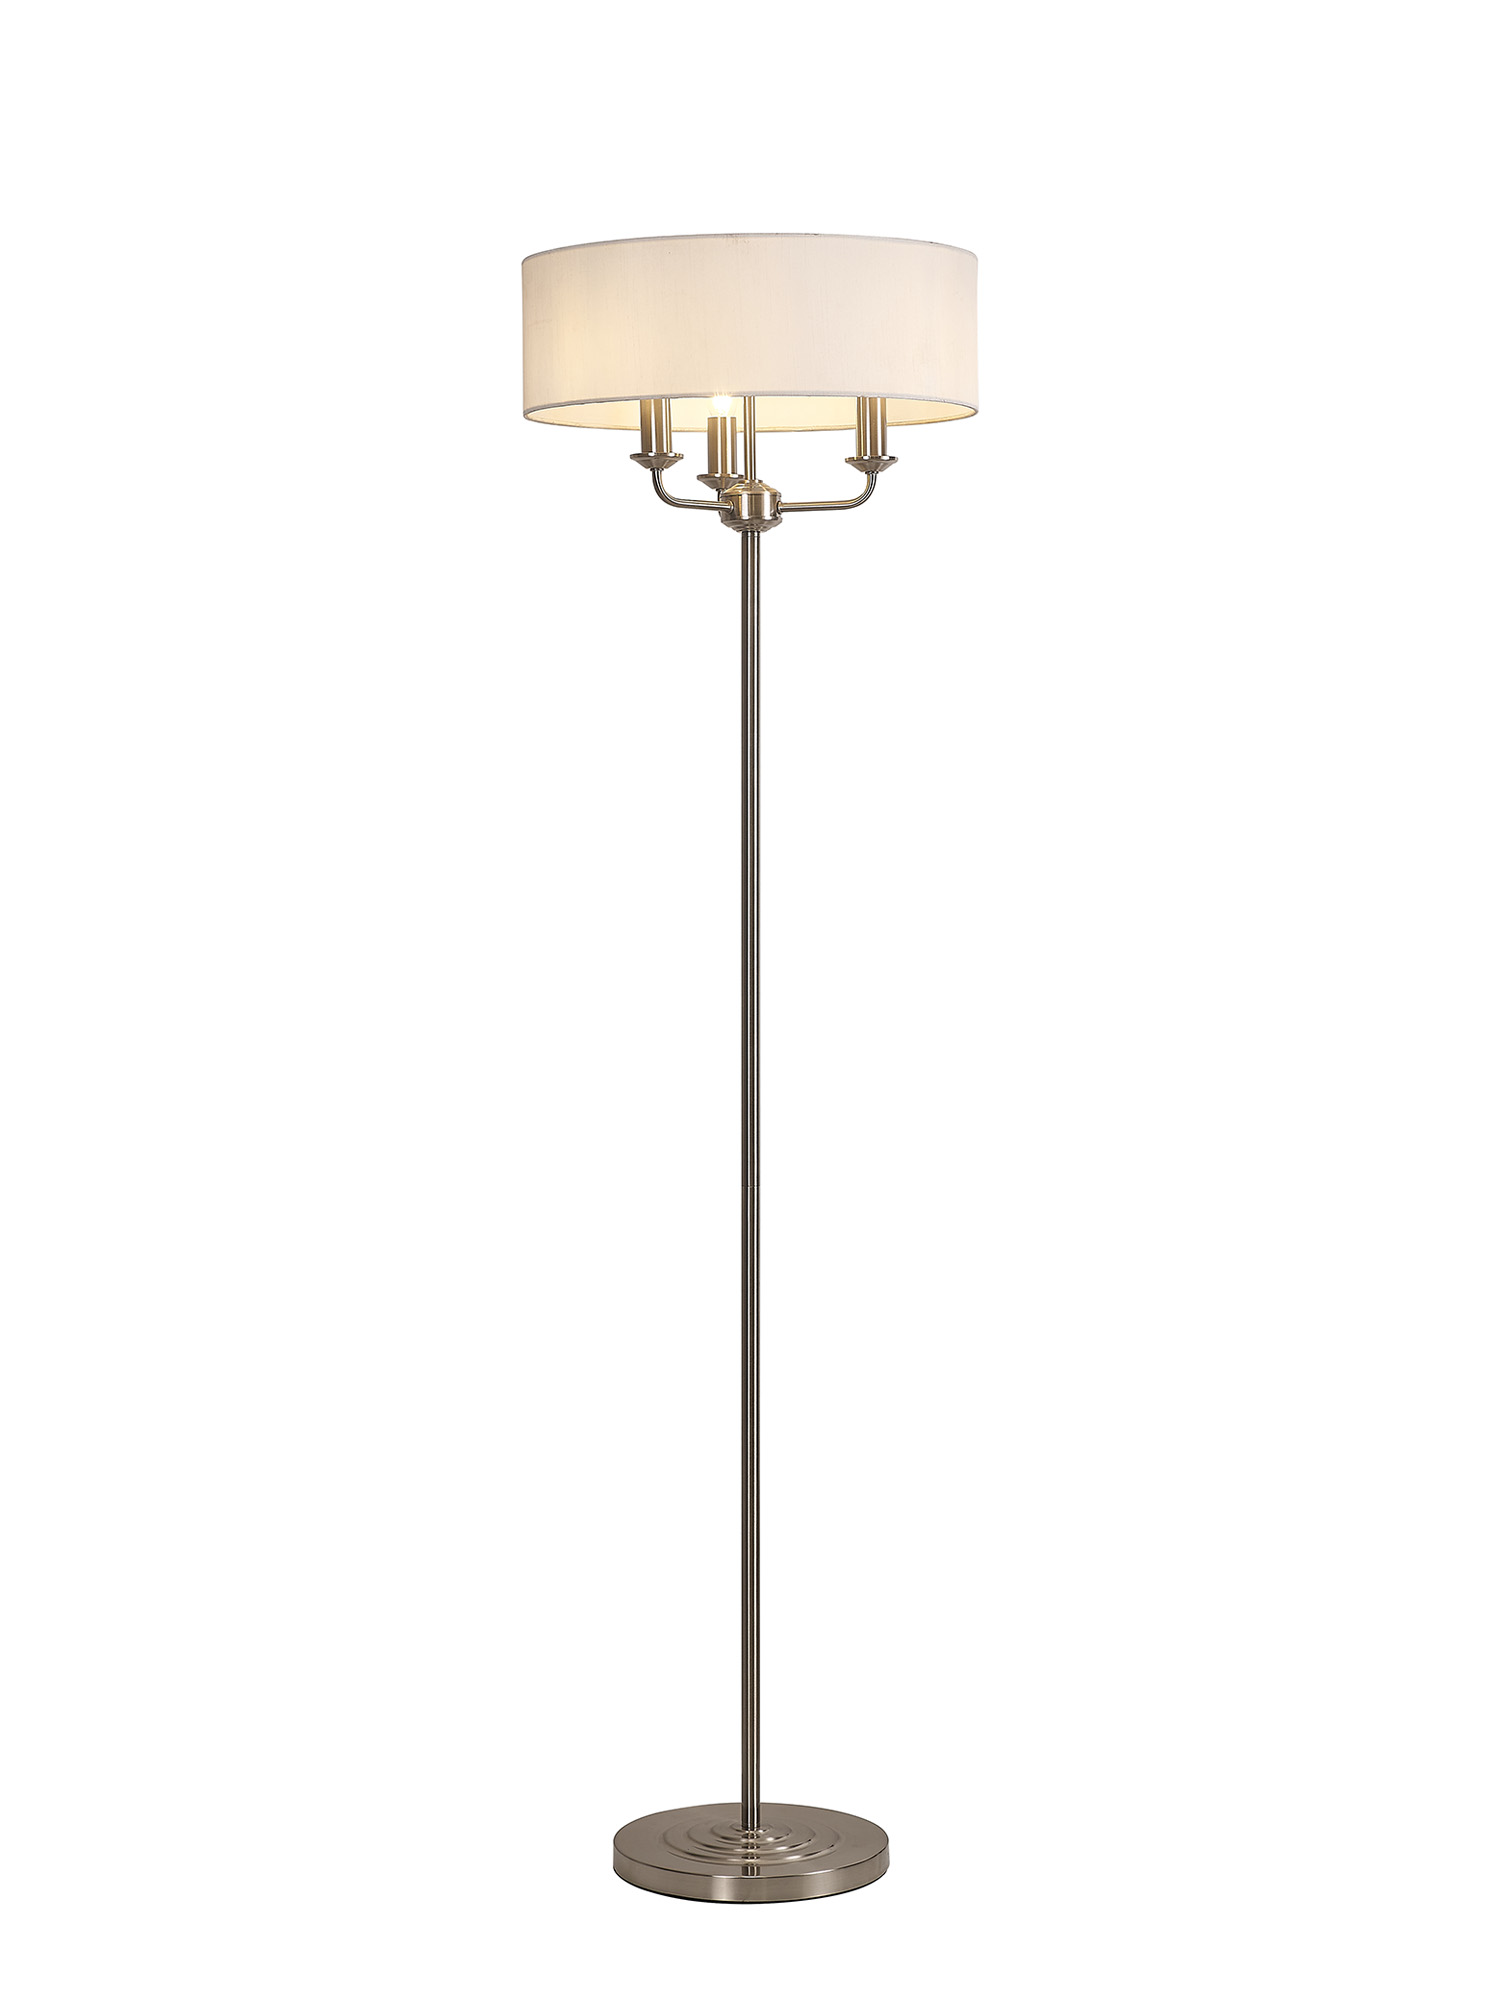 DK0921  Banyan 45cm 3 Light Floor Lamp Satin Nickel, White